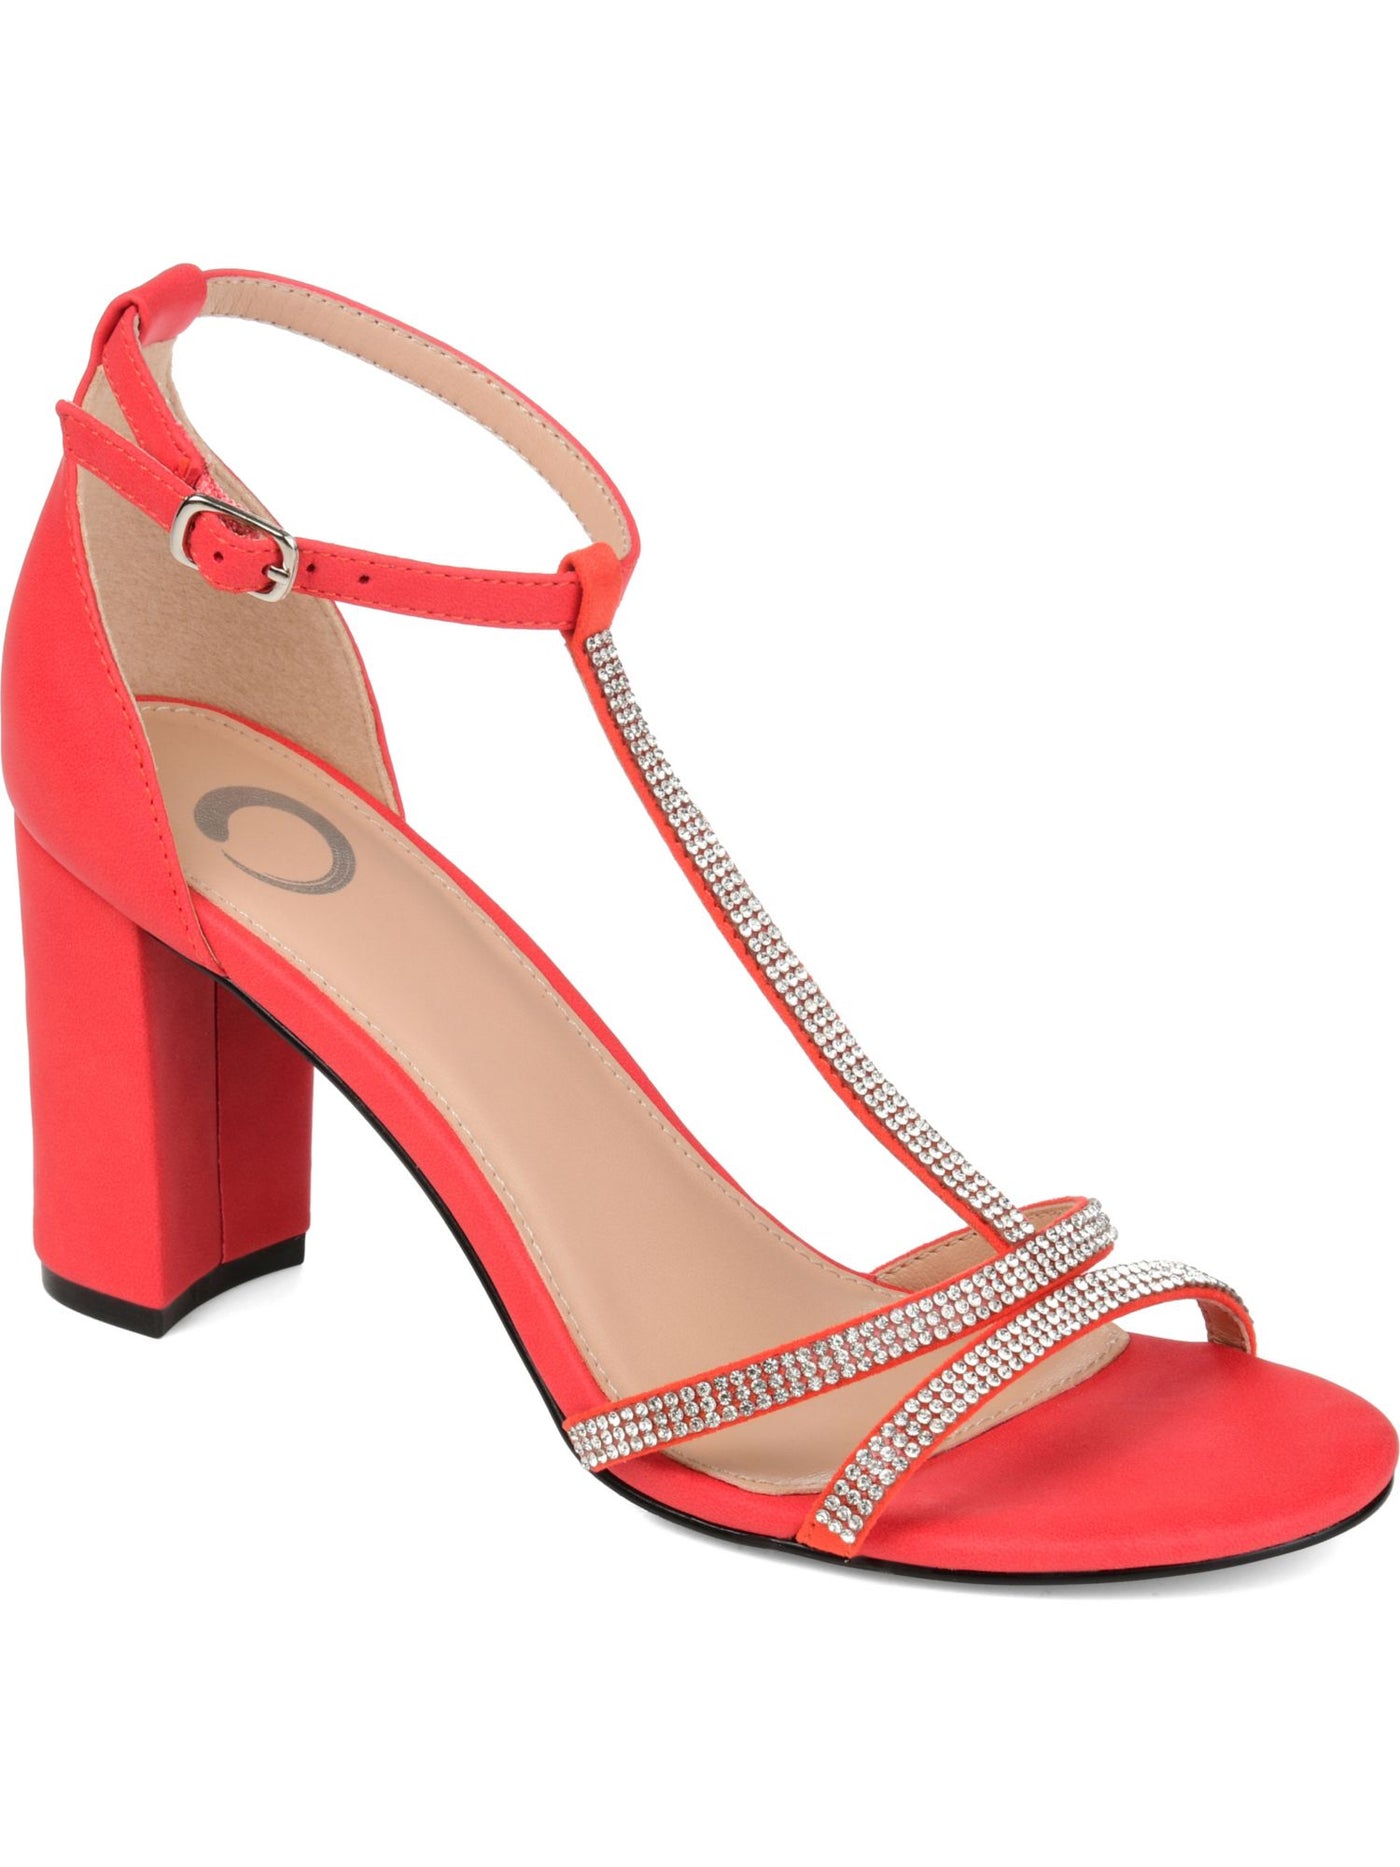 JOURNEE COLLECTION Womens Red T-Strap Rhinestone Denali Round Toe Block Heel Buckle Dress Pumps Shoes 7.5 M